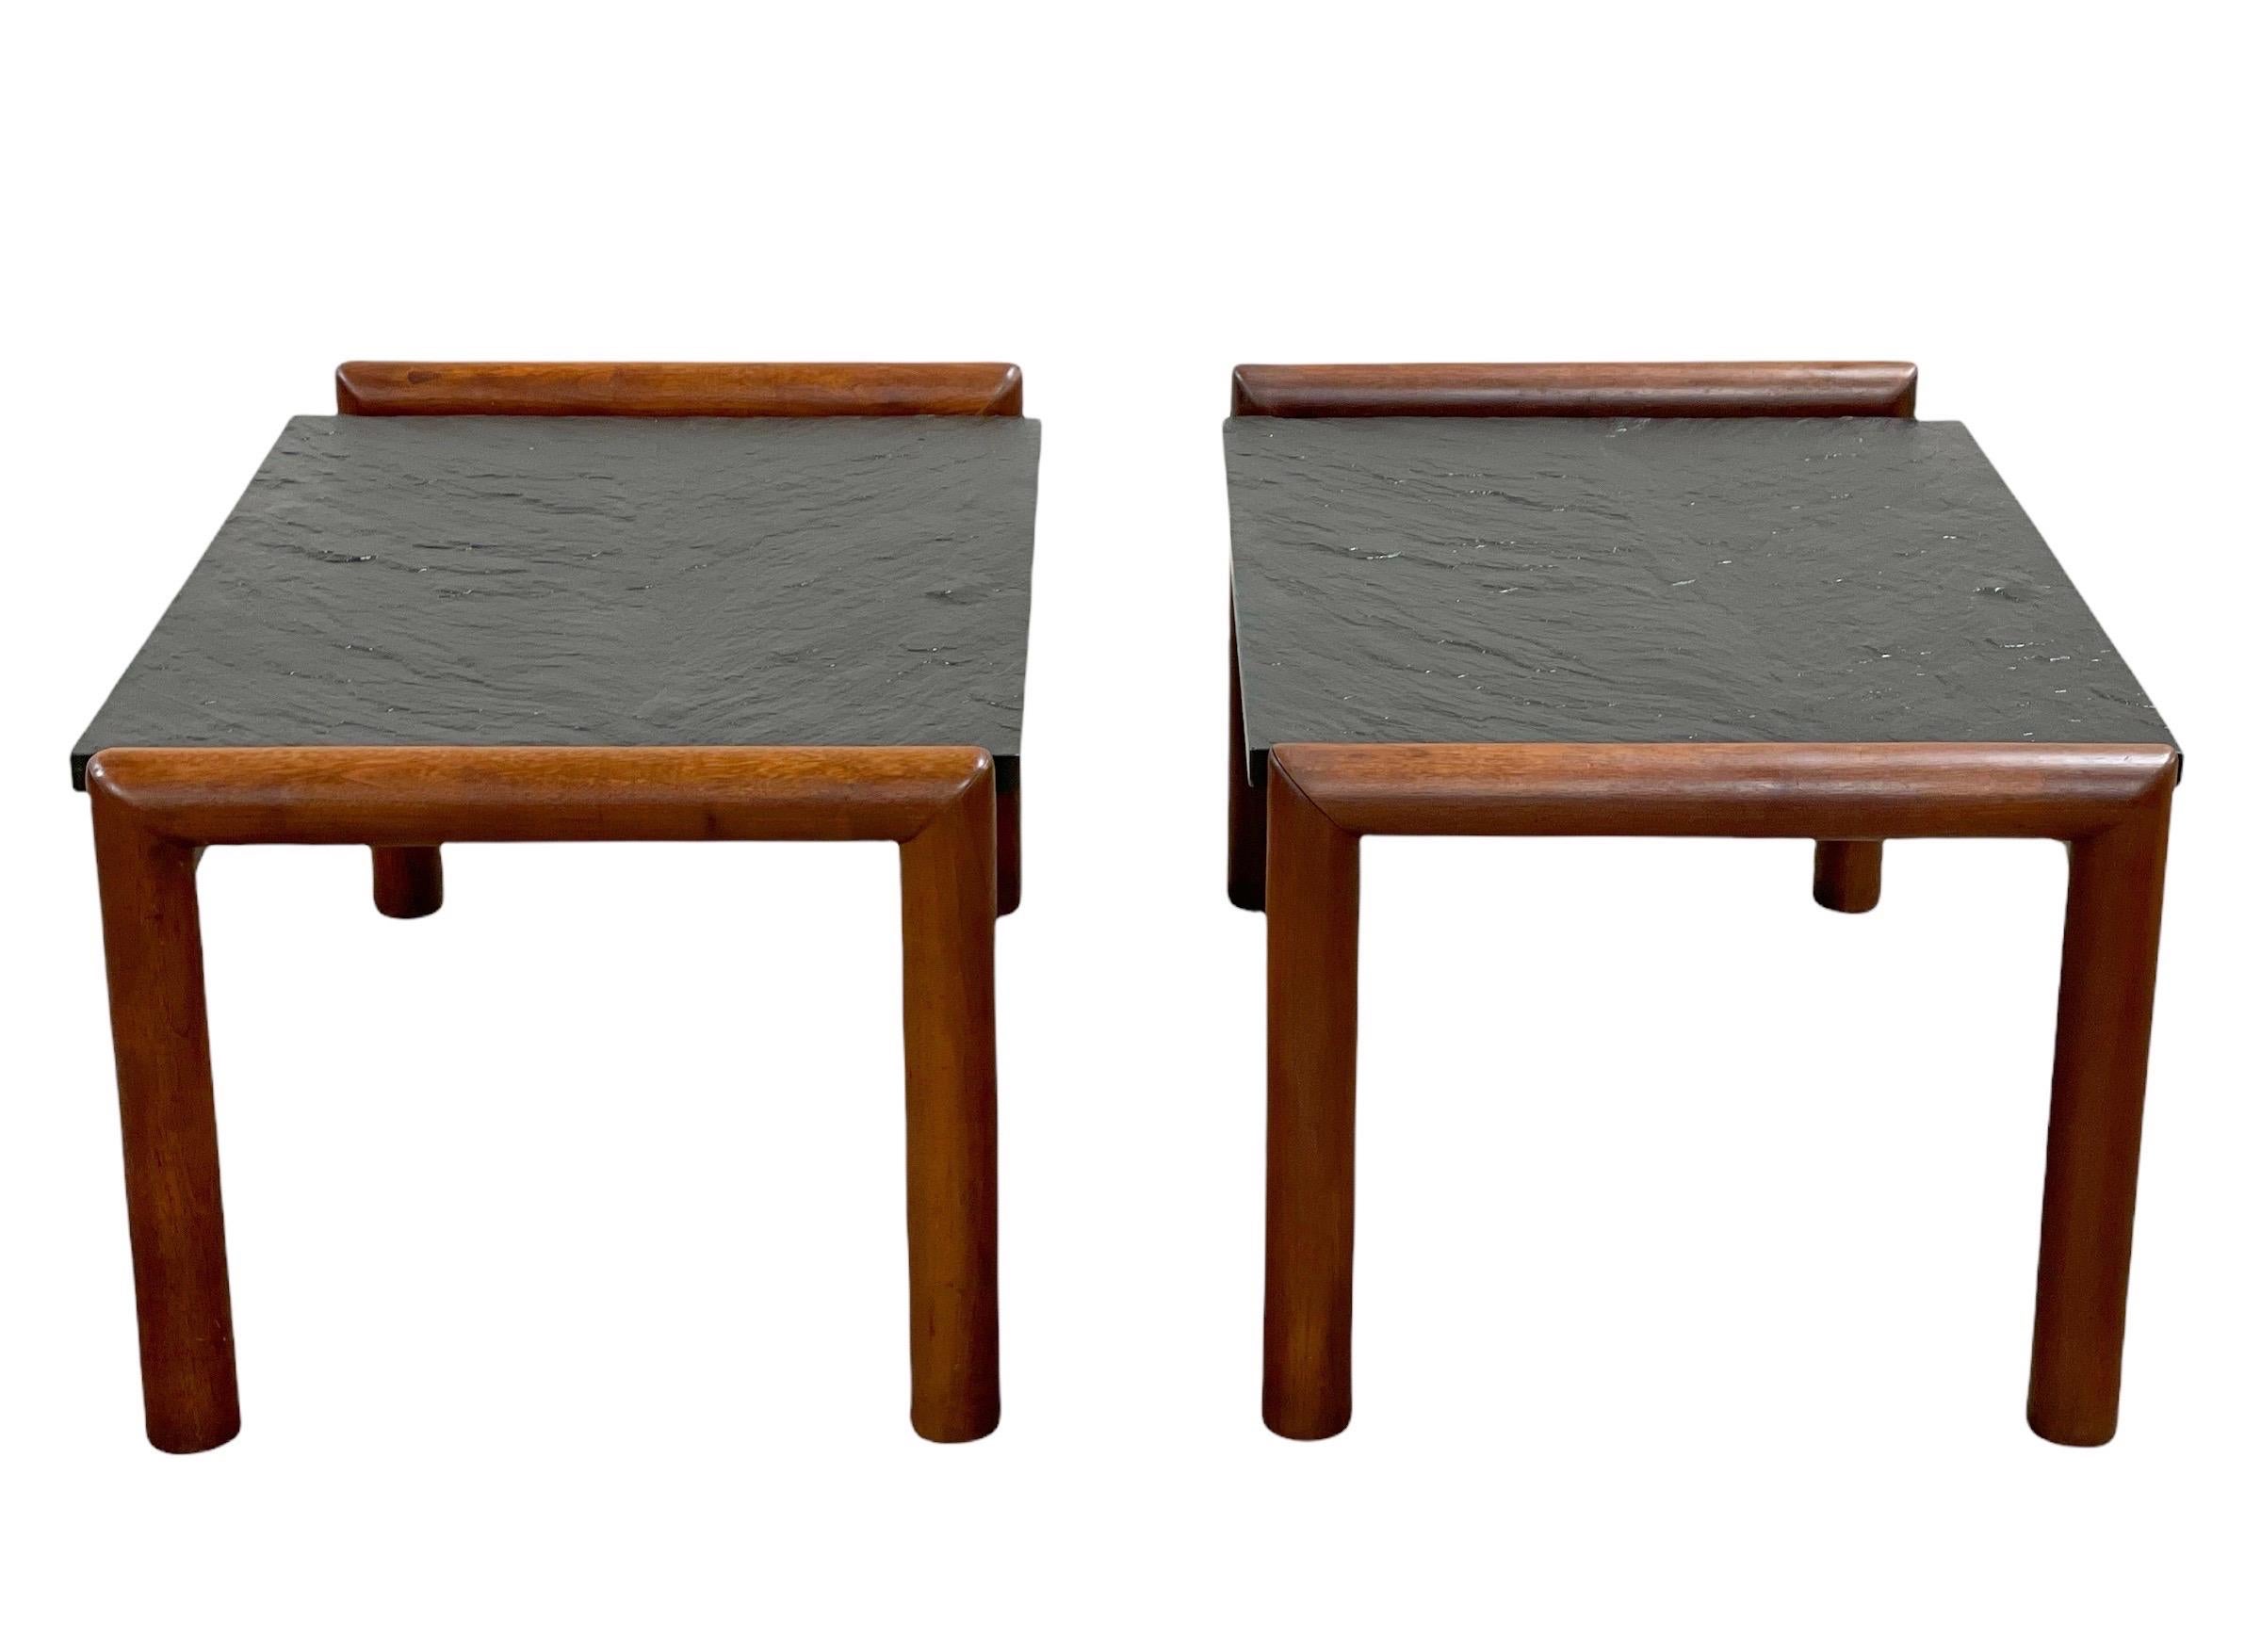 American Adrian Pearsall Midcentury Organic Modern Side Tables - Walnut + Slate - a Pair